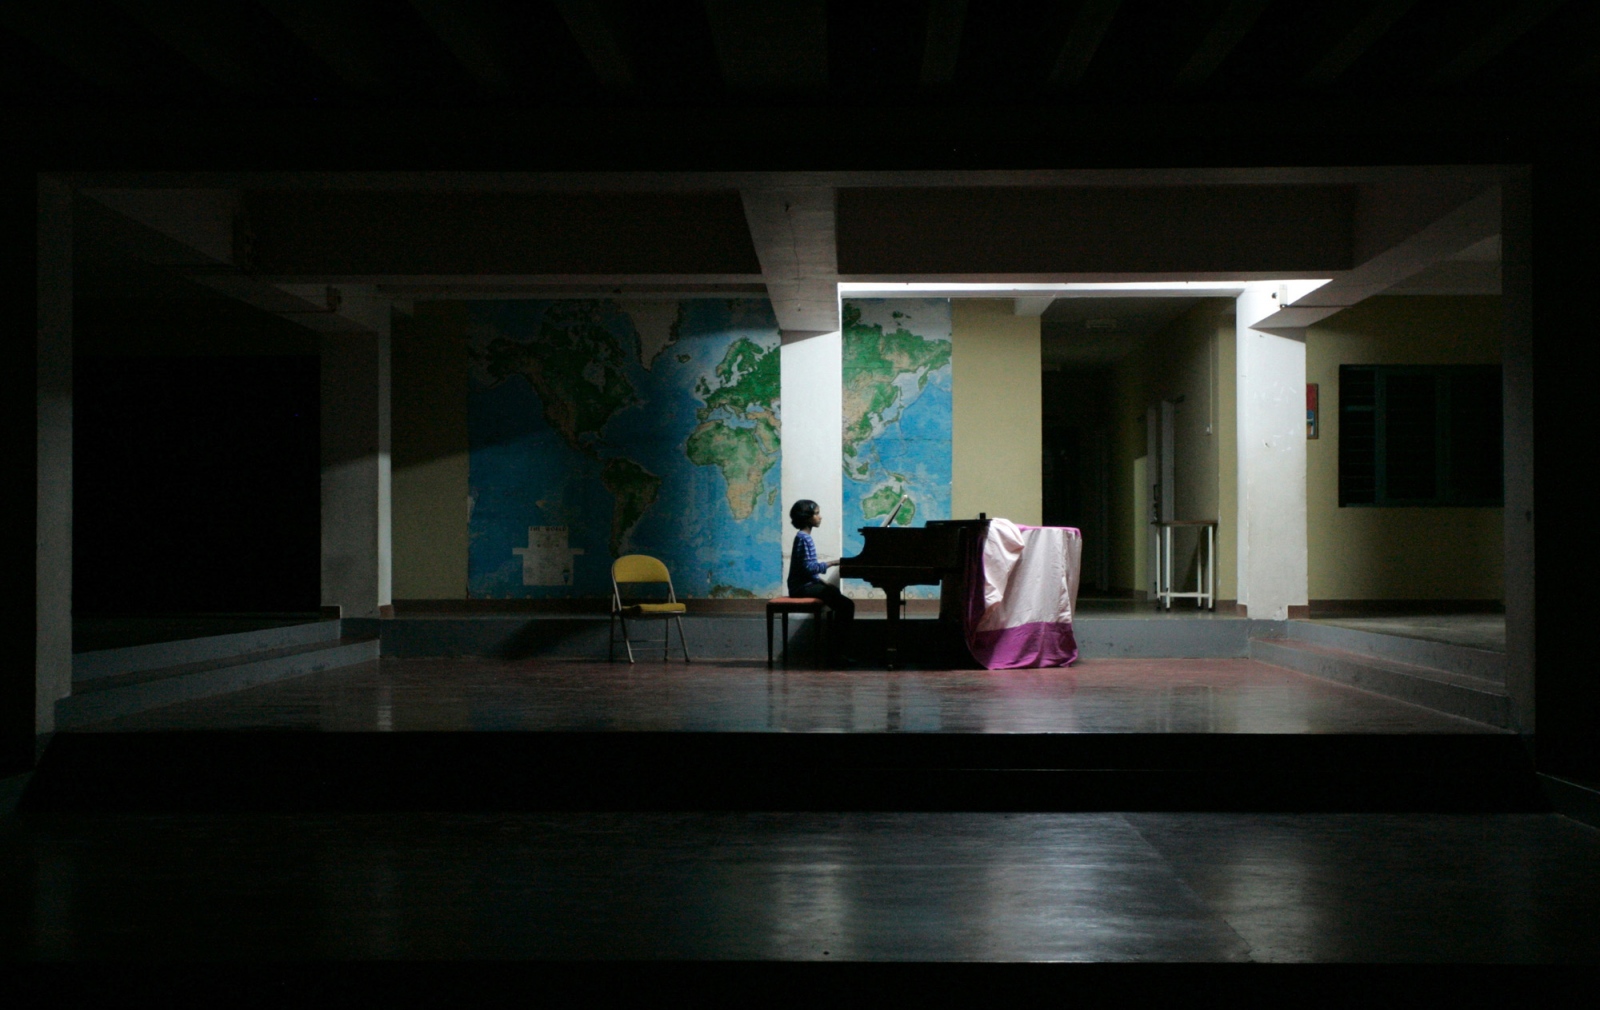 Manjula, 12, practices piano in the main school building.